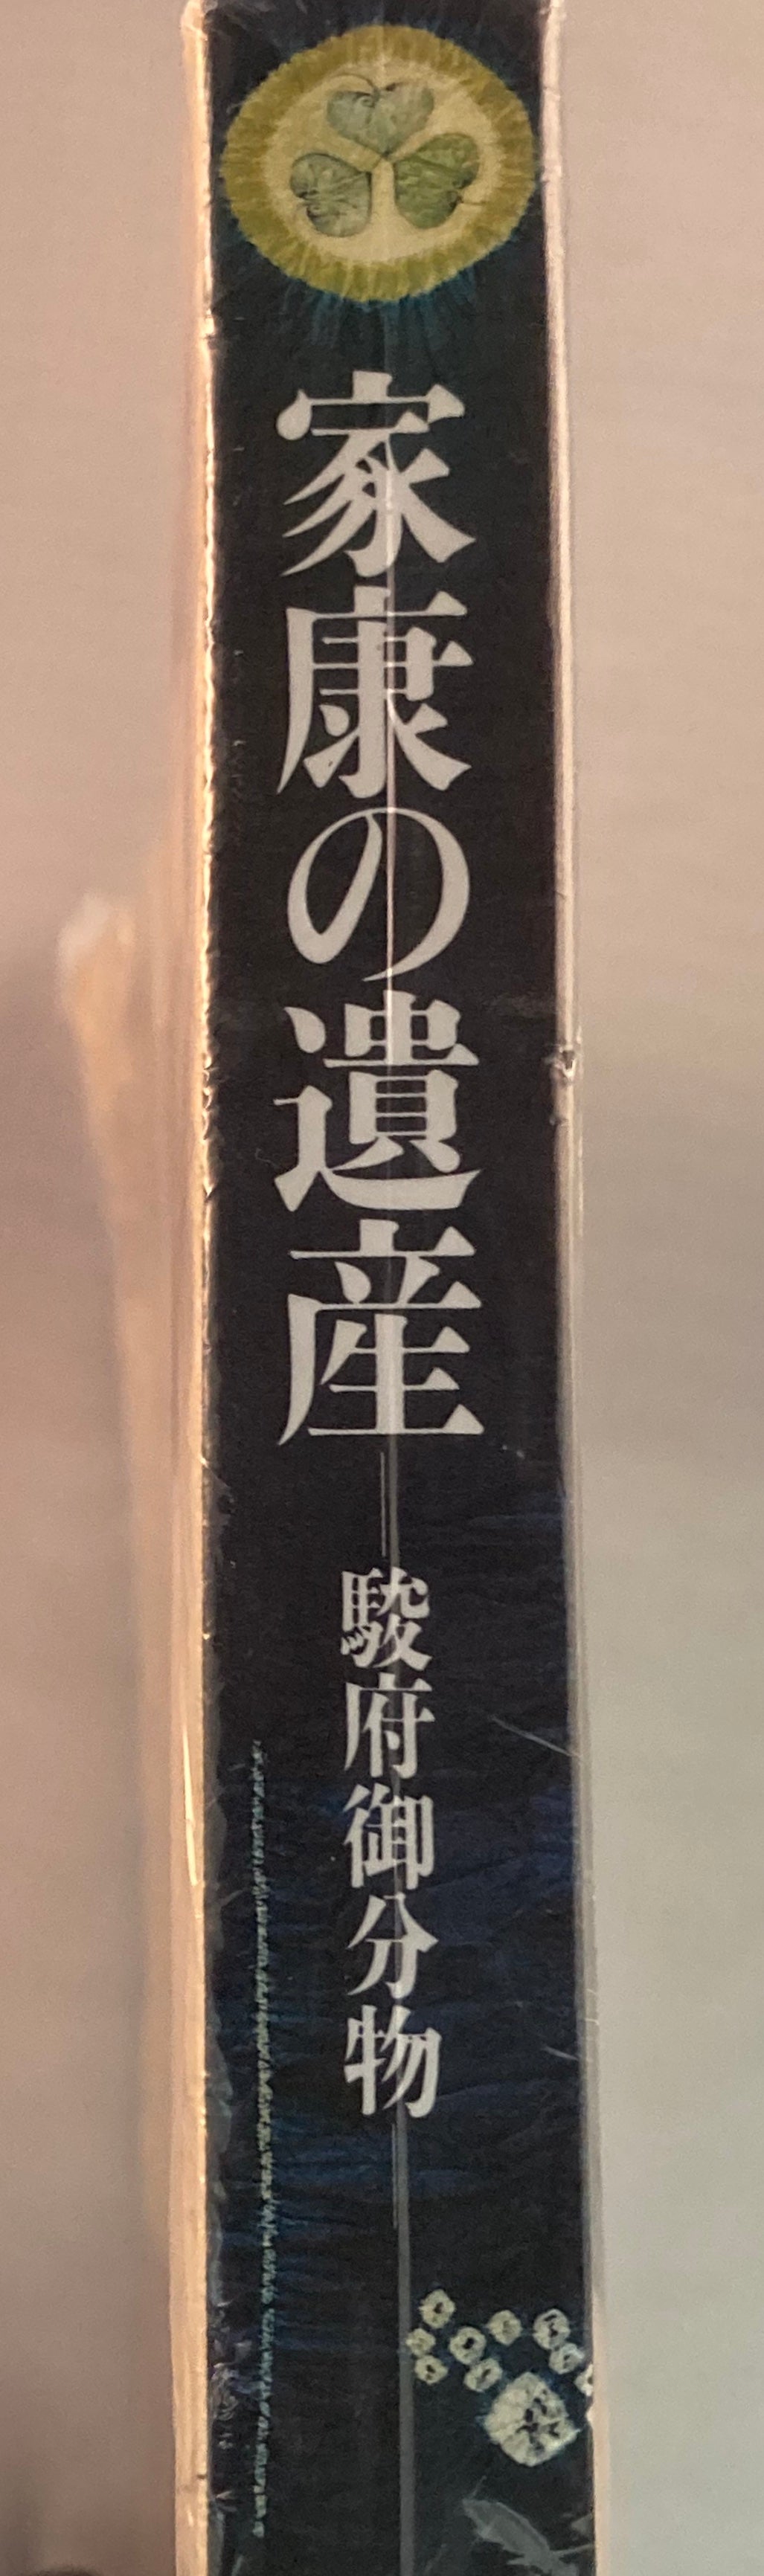 Tokugawa Ieyasu legacy collection. - Yamazakura